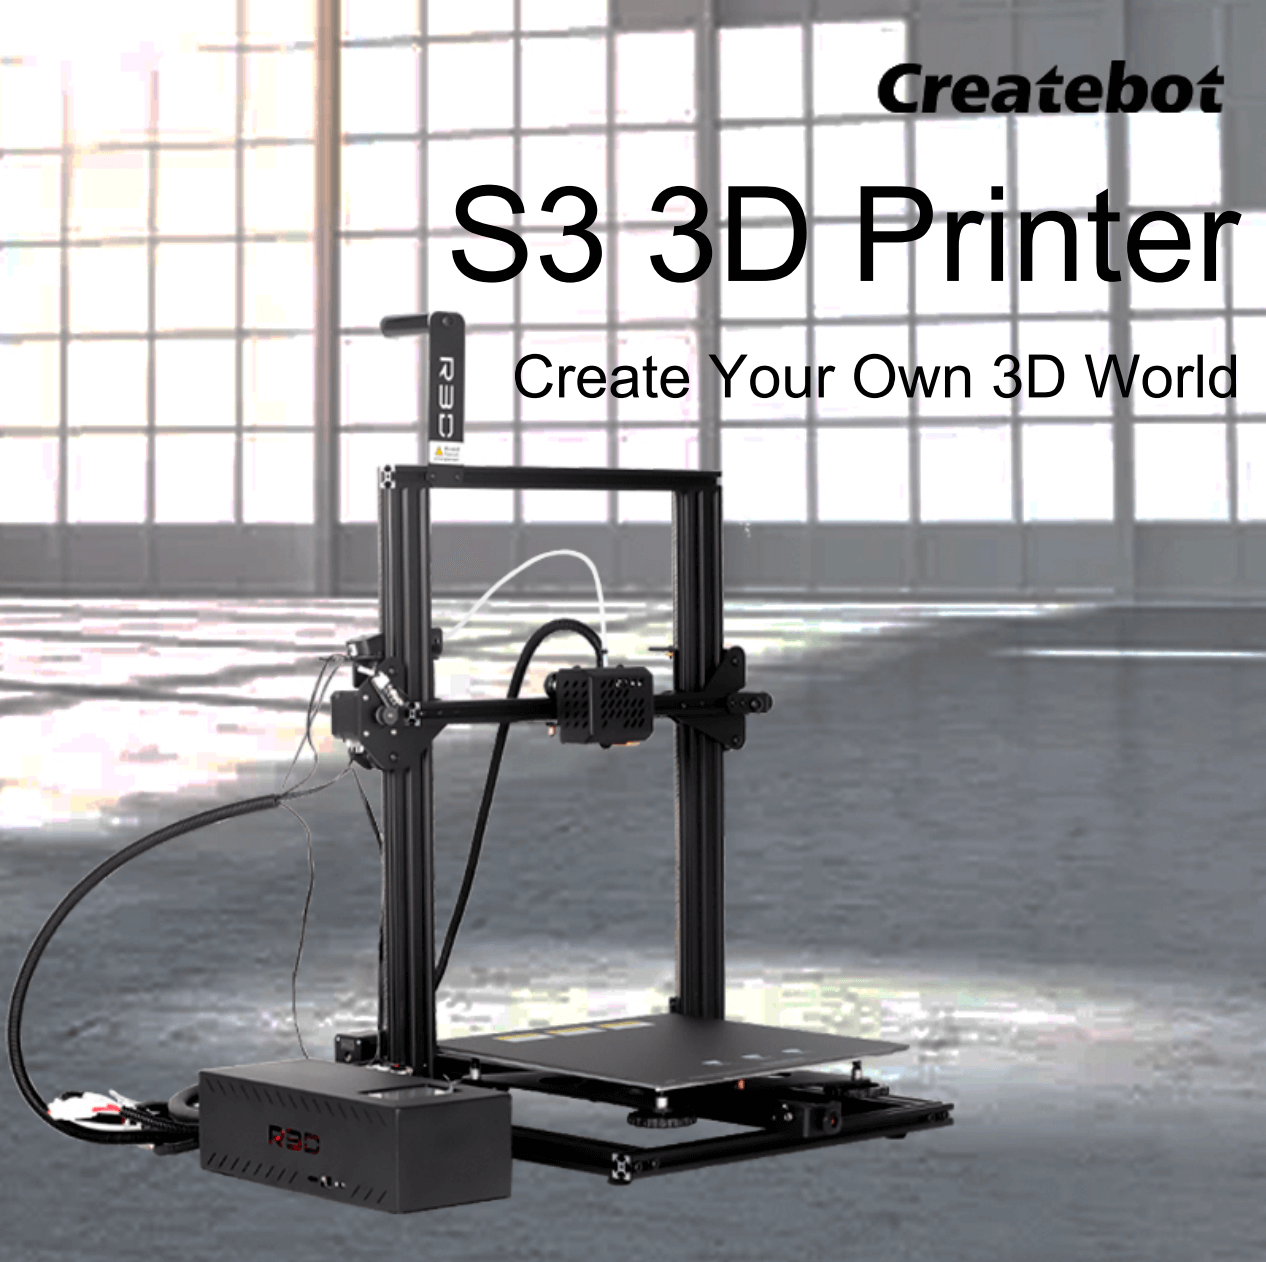 createbot s3 3d printer